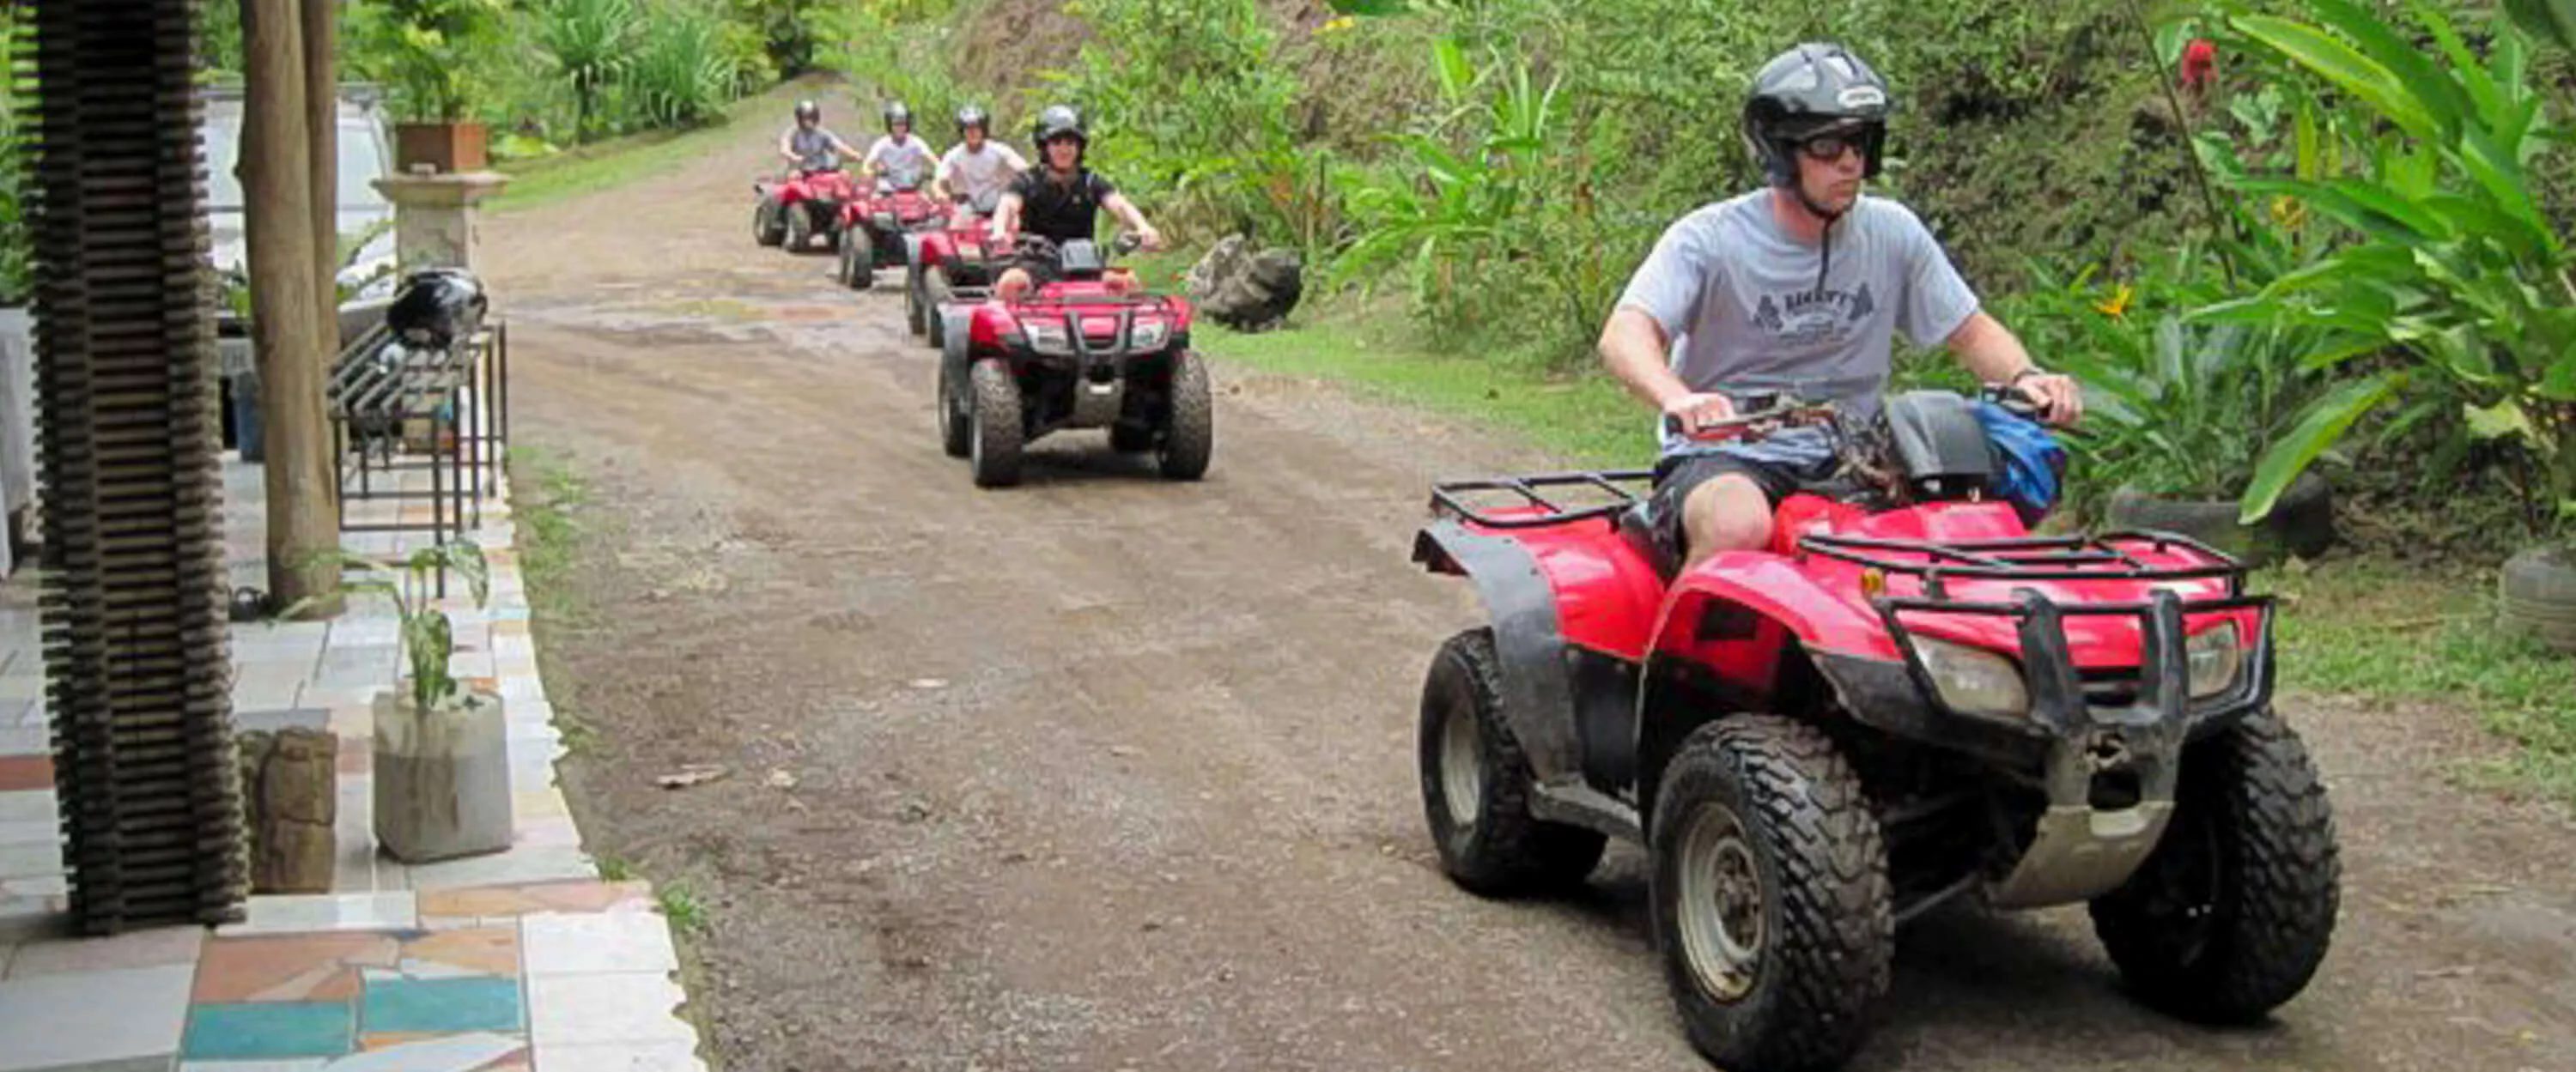 ATV Tamarindo in Costa Rica, North America | ATVs - Rated 0.8